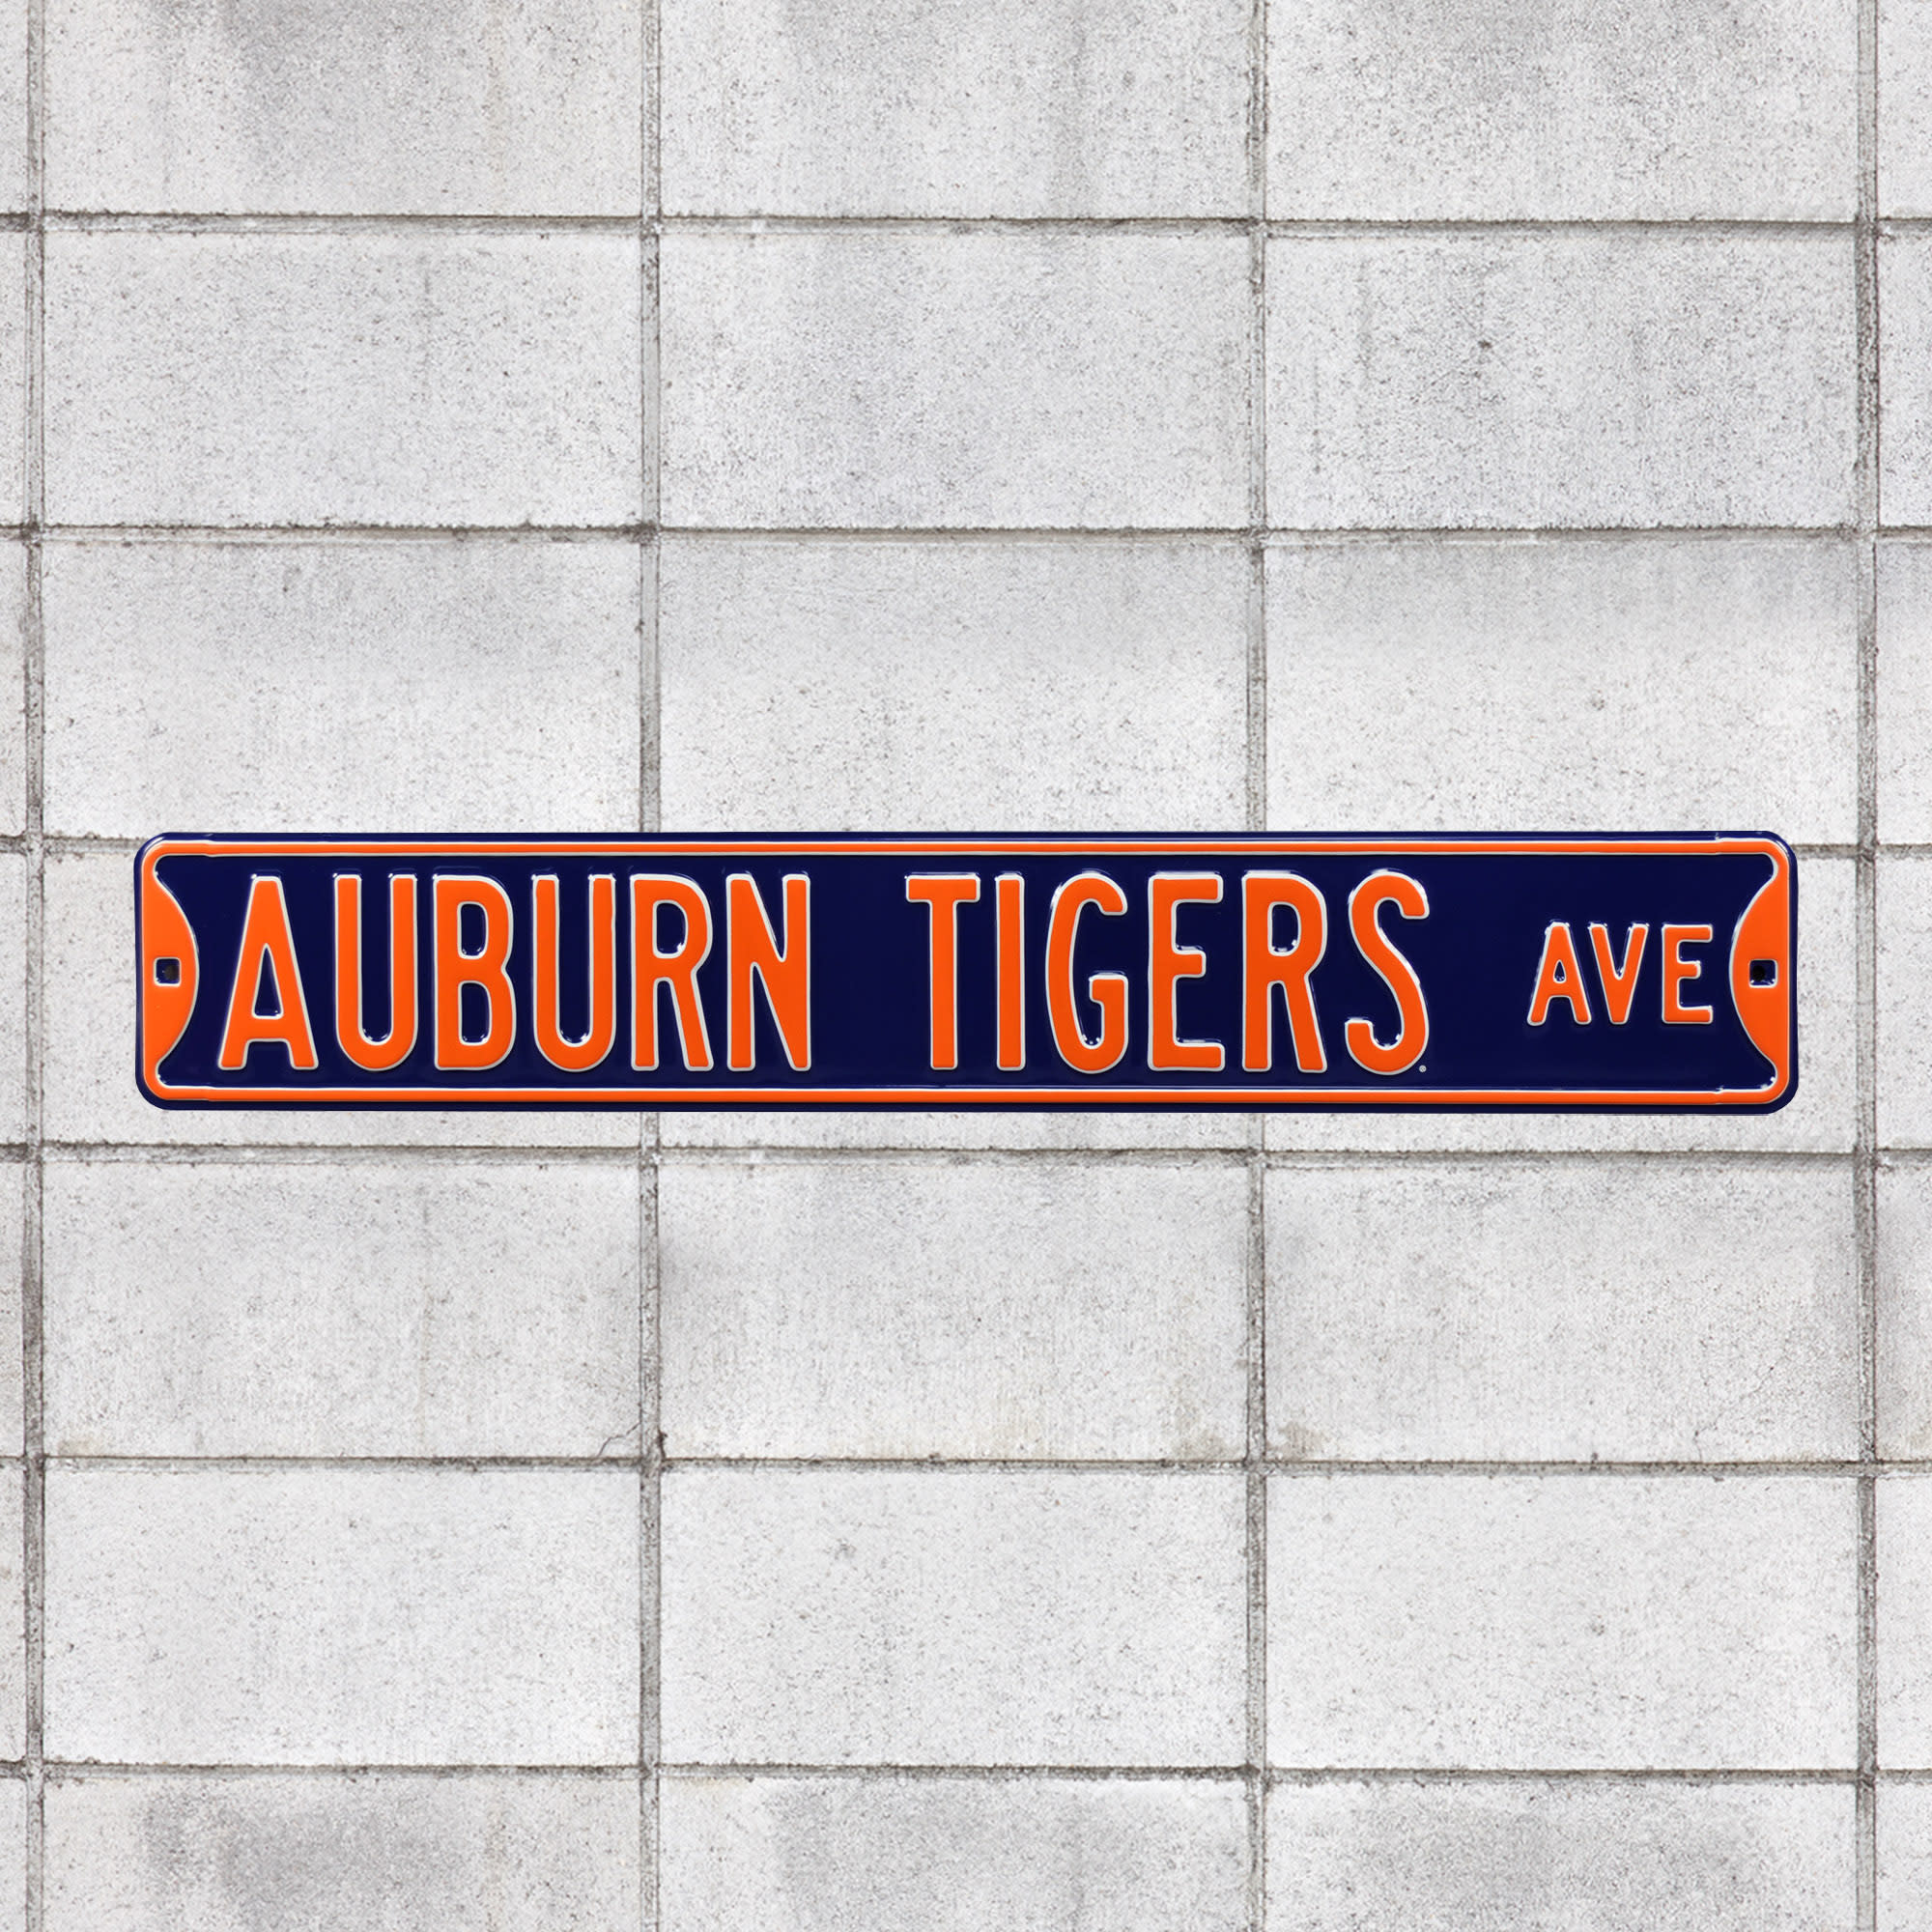 Auburn Tigers: Auburn Tigers Avenue - Officially Licensed Metal Street Sign 36.0"W x 6.0"H by Fathead | 100% Steel